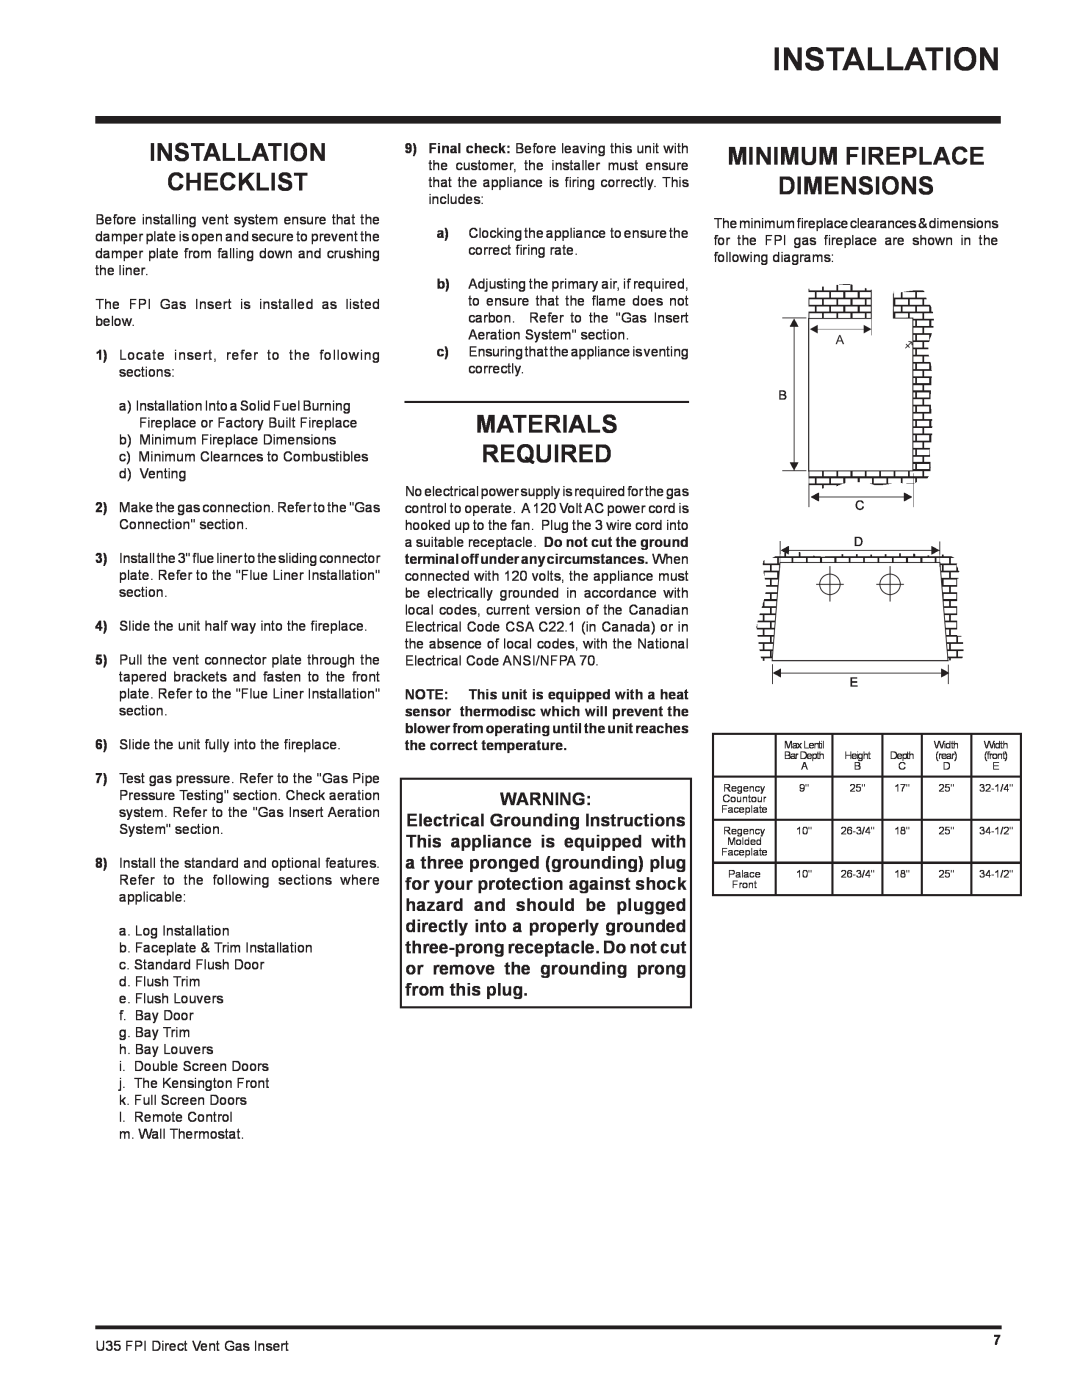 Regency U35-LP1, U35-NG1 installation manual Installation Checklist, Materials Required, Minimum Fireplace Dimensions 